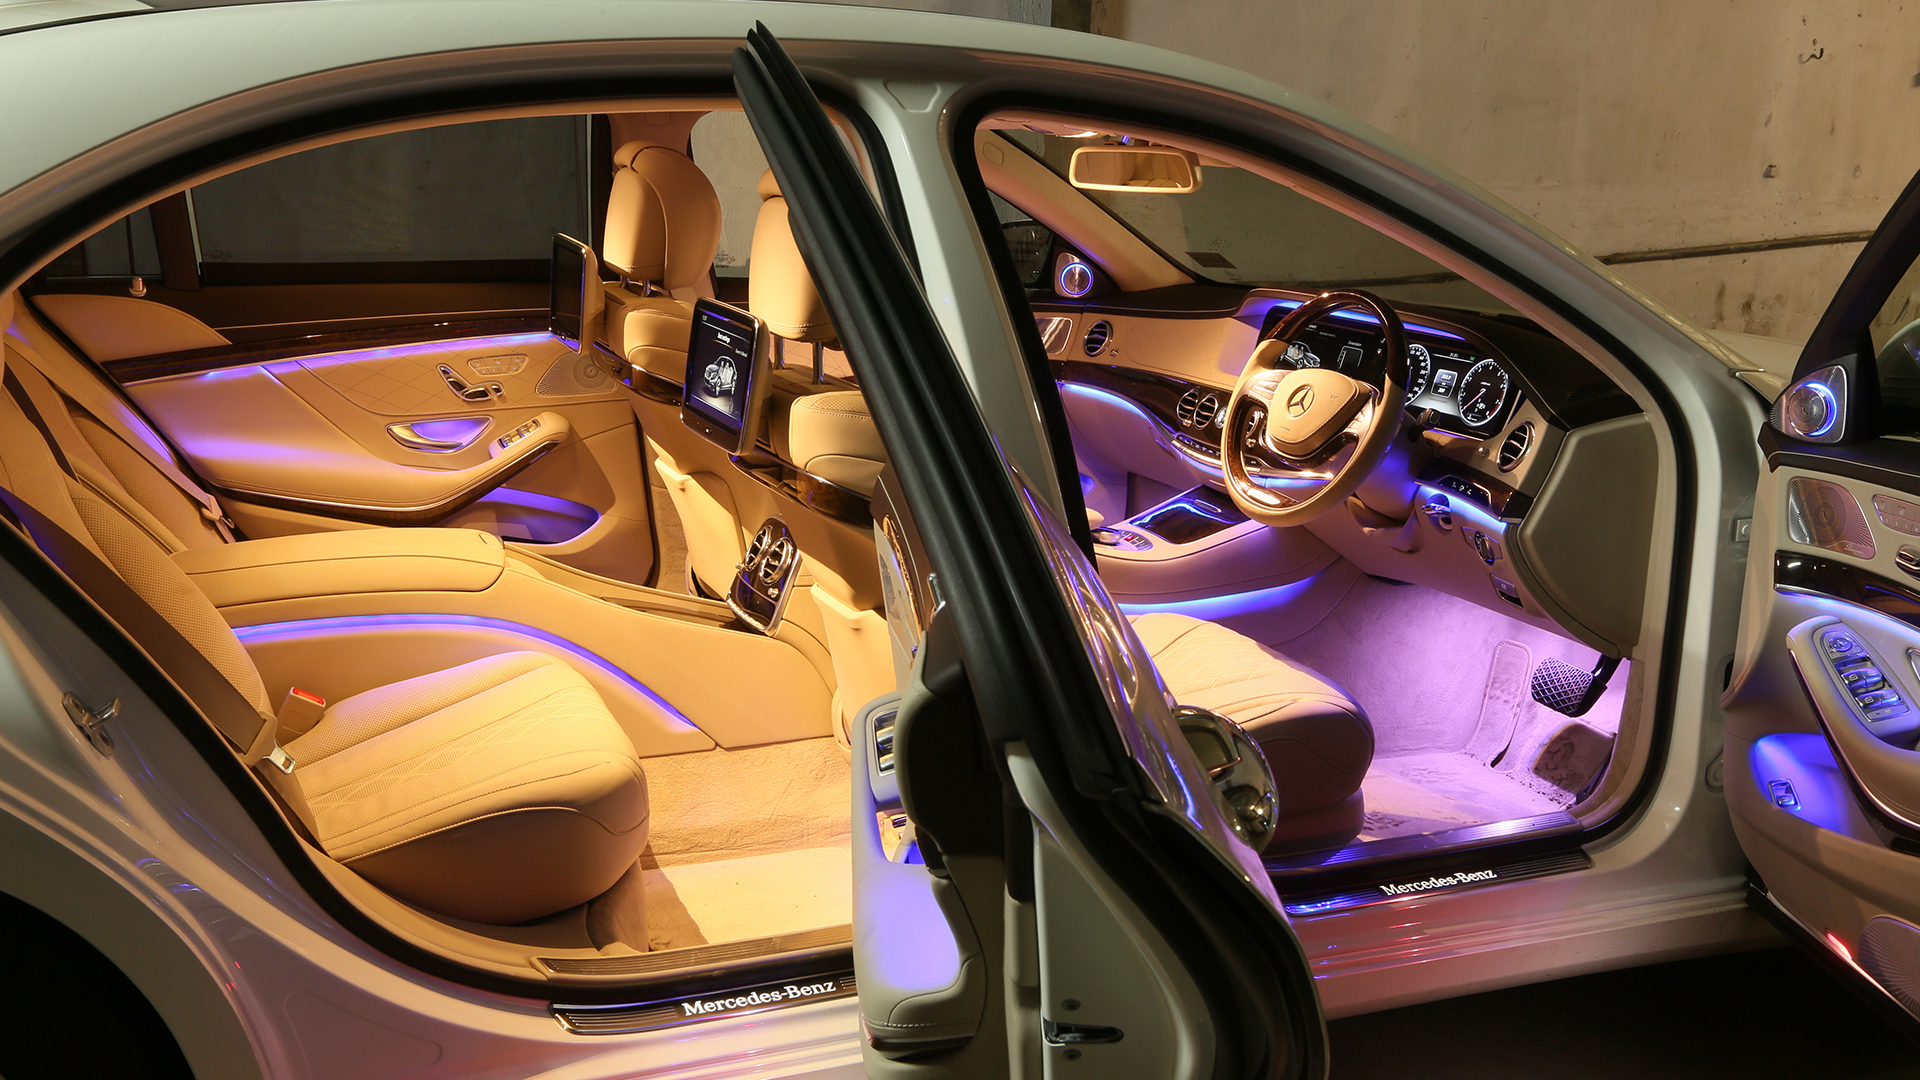 Mercedesbenz SLK55 2013 AMG Interior